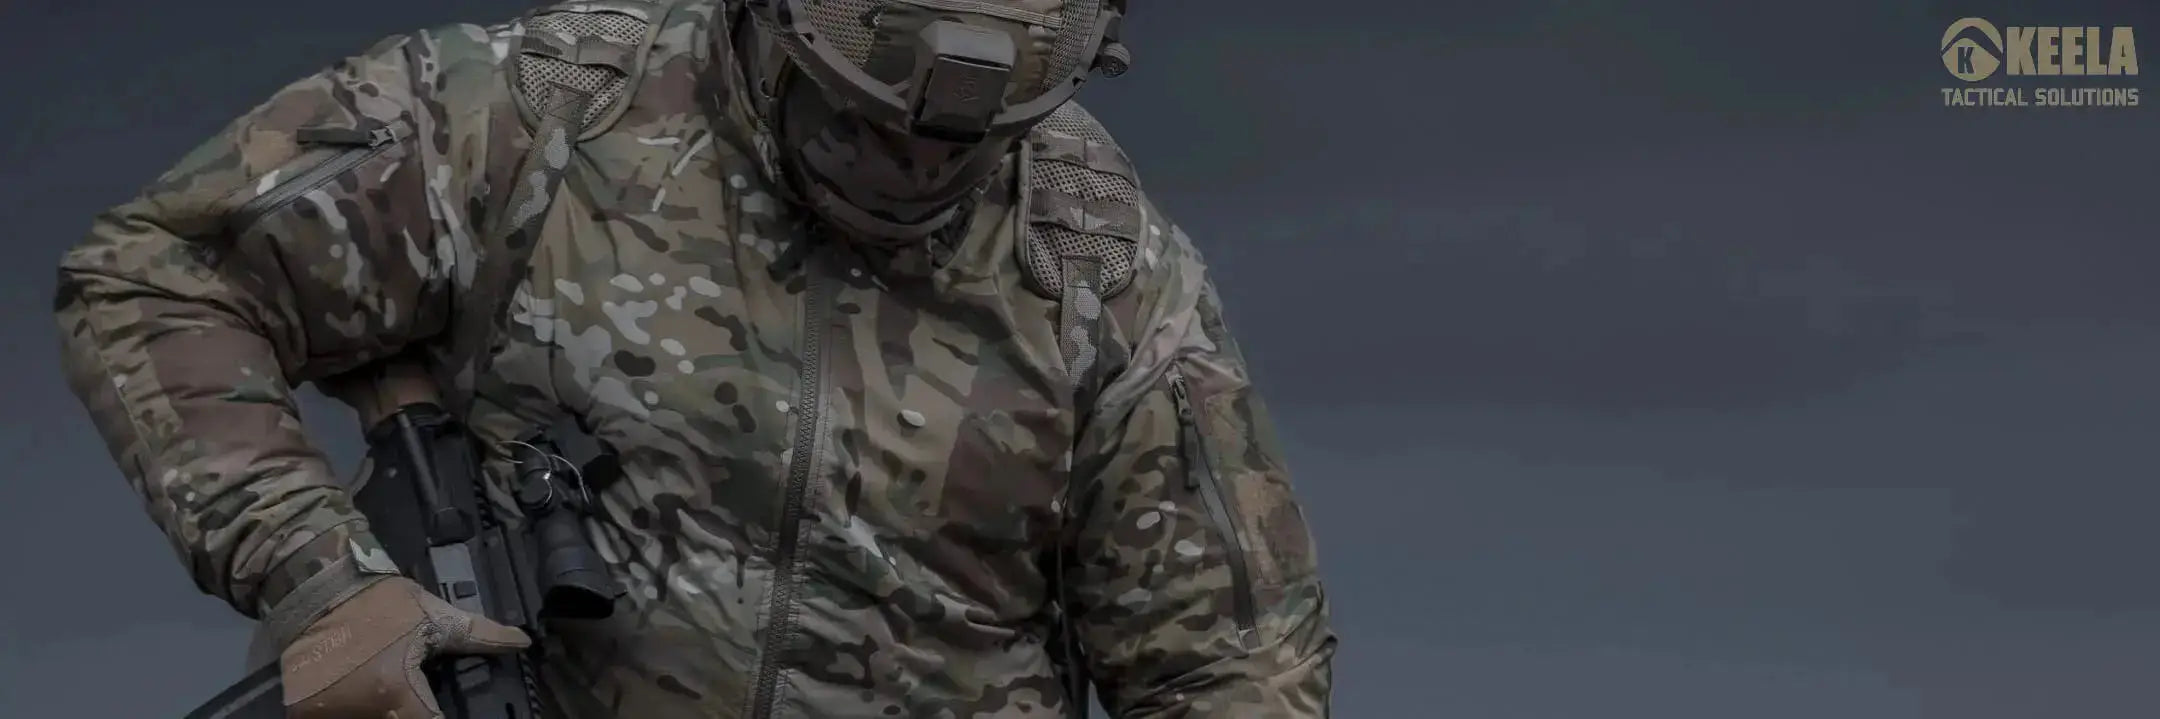 Keela Military Tactical Jackets